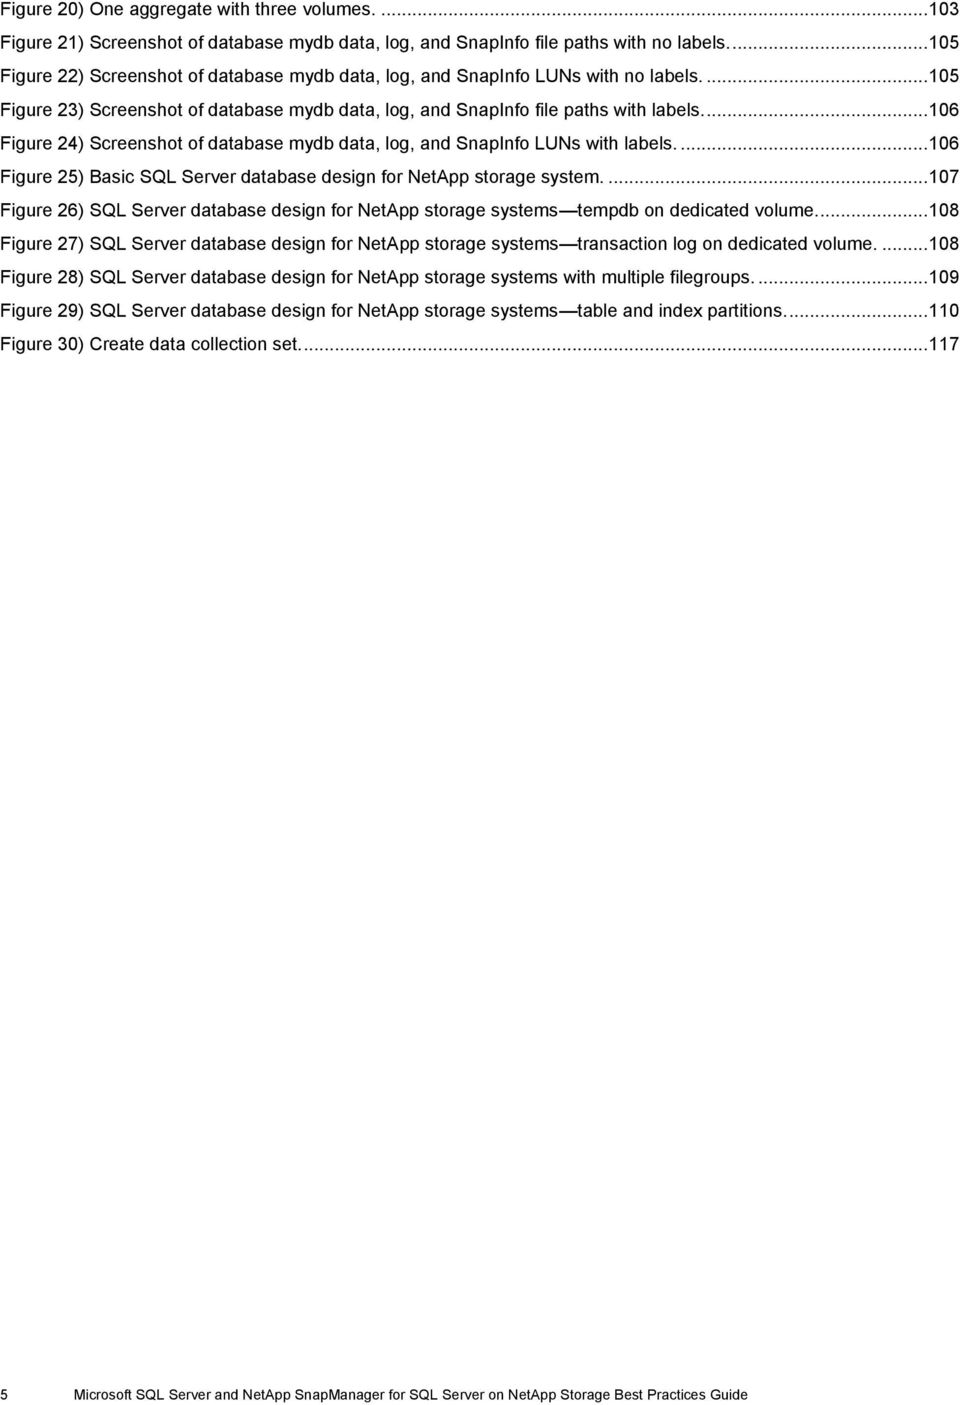 ... 106 Figure 24) Screenshot of database mydb data, log, and SnapInfo LUNs with labels.... 106 Figure 25) Basic SQL Server database design for NetApp storage system.